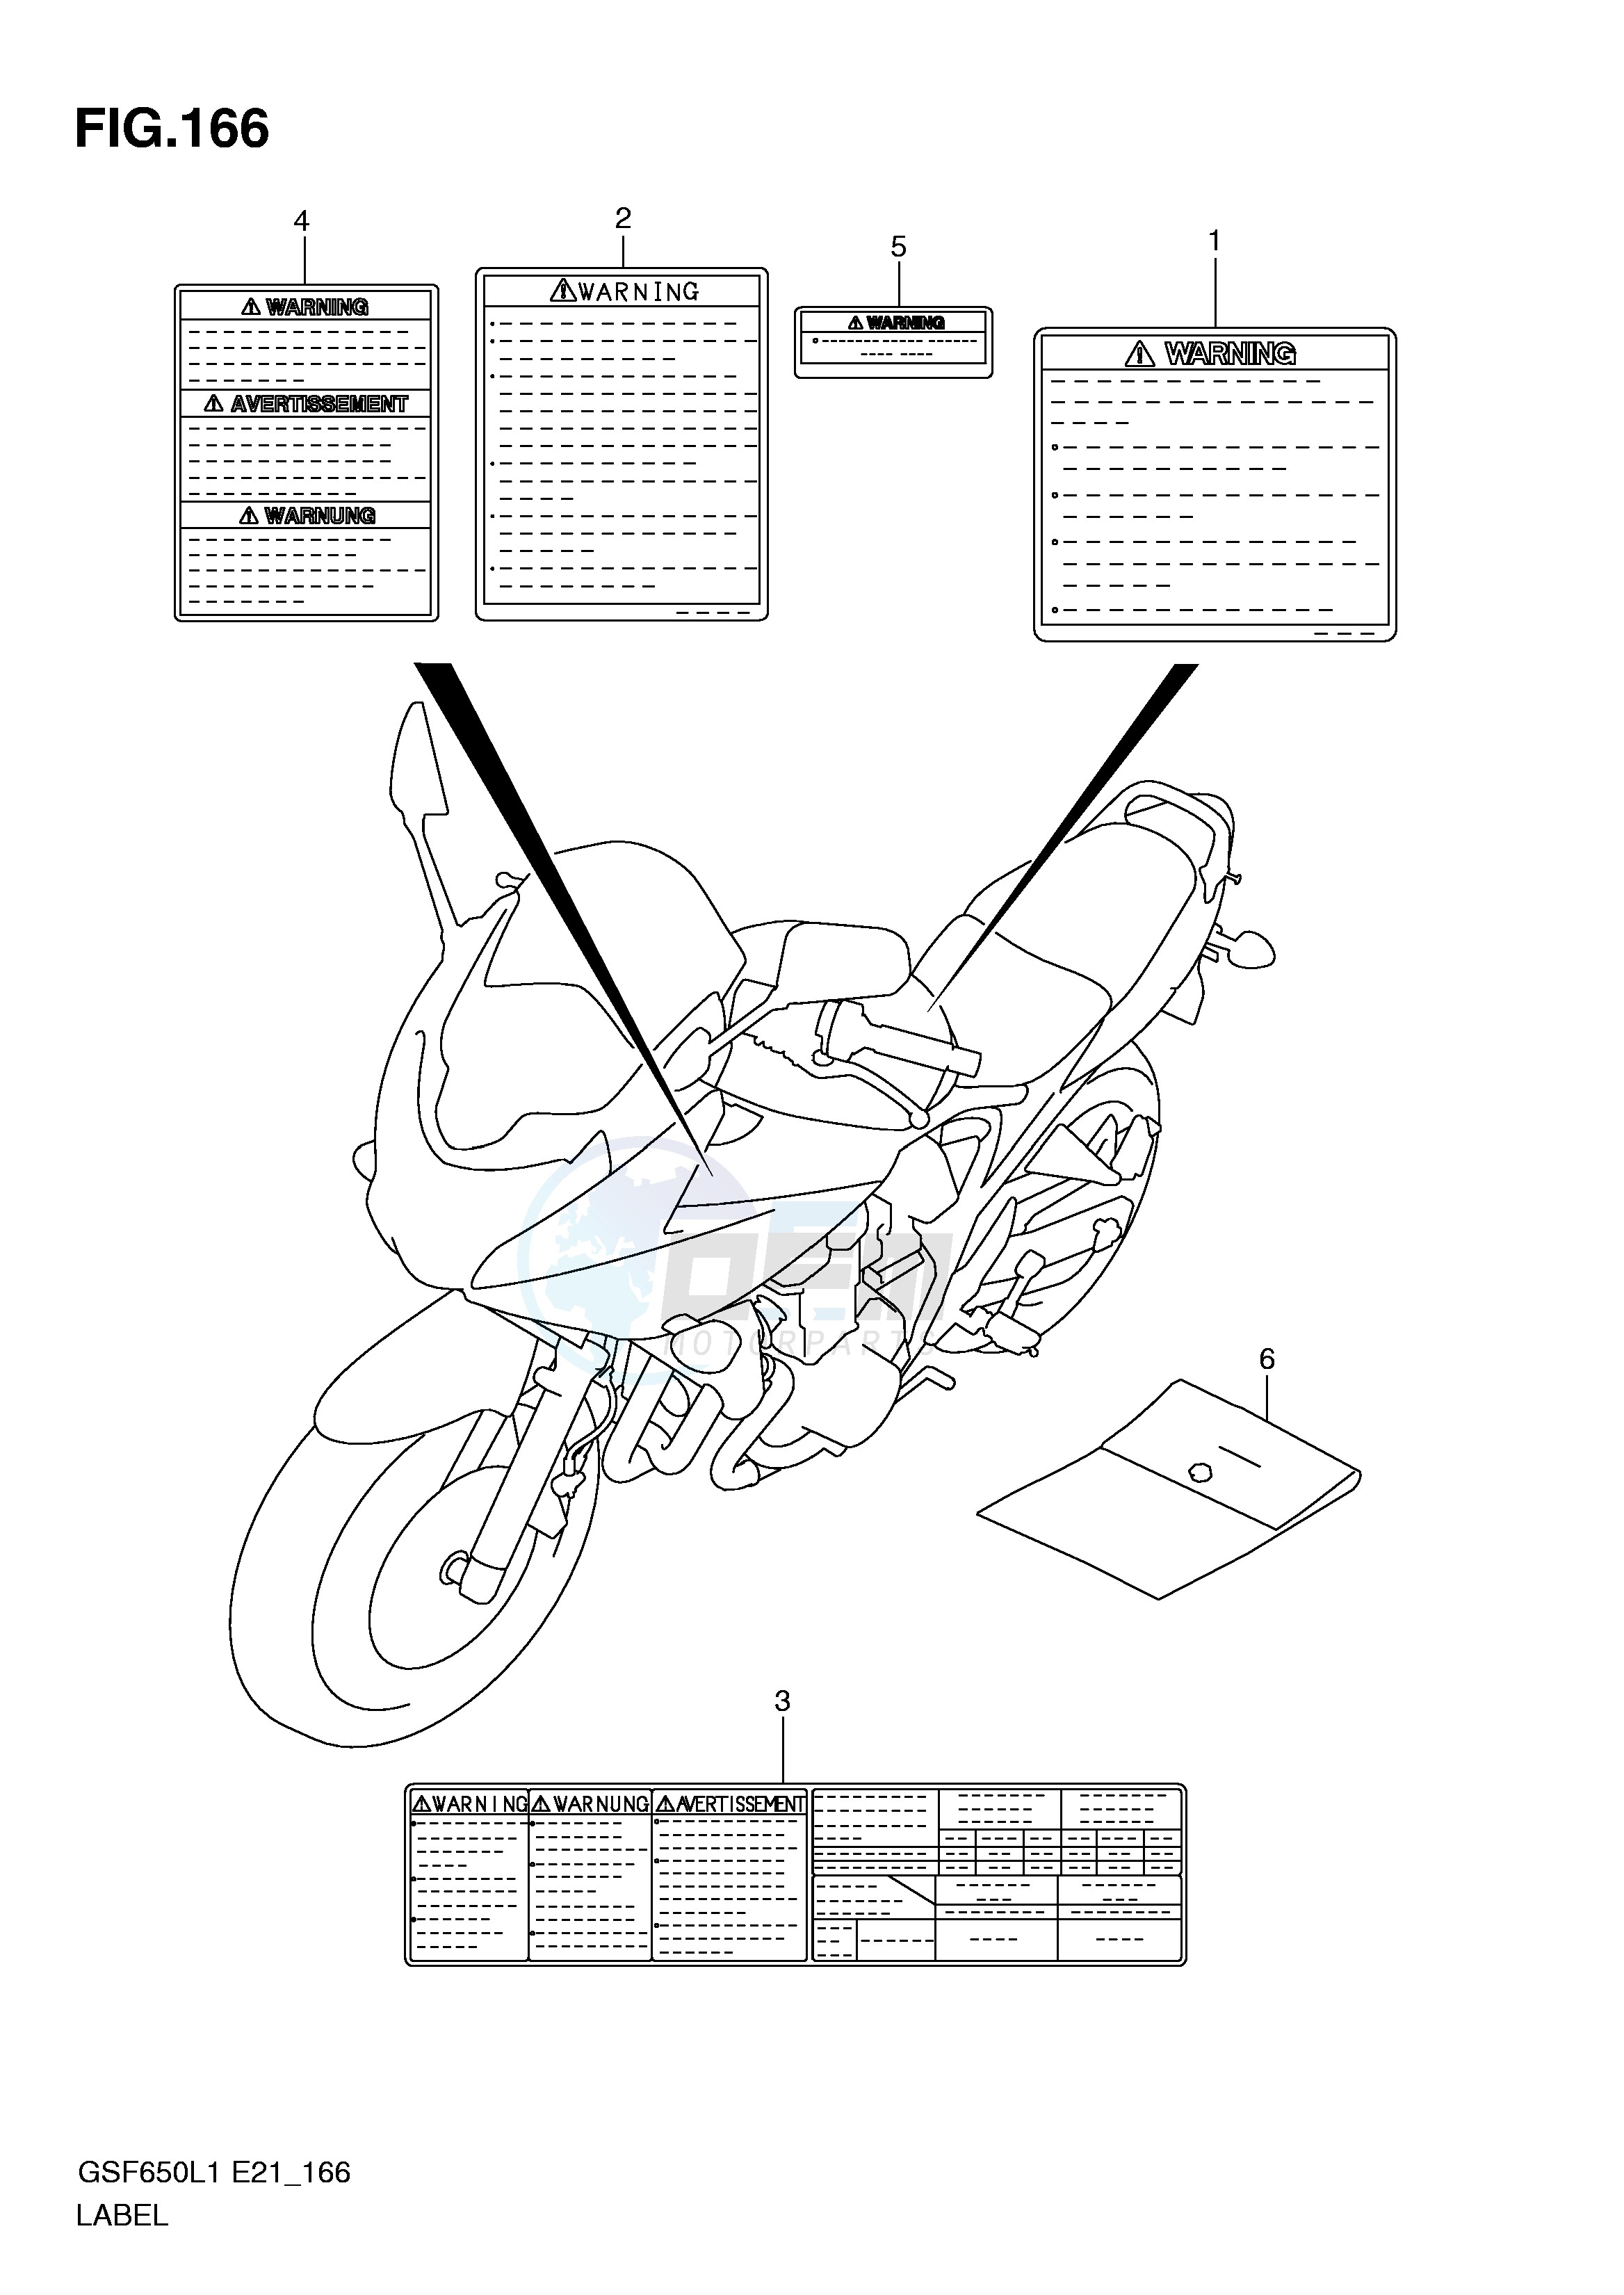 LABEL (GSF650SUAL1 E21) blueprint